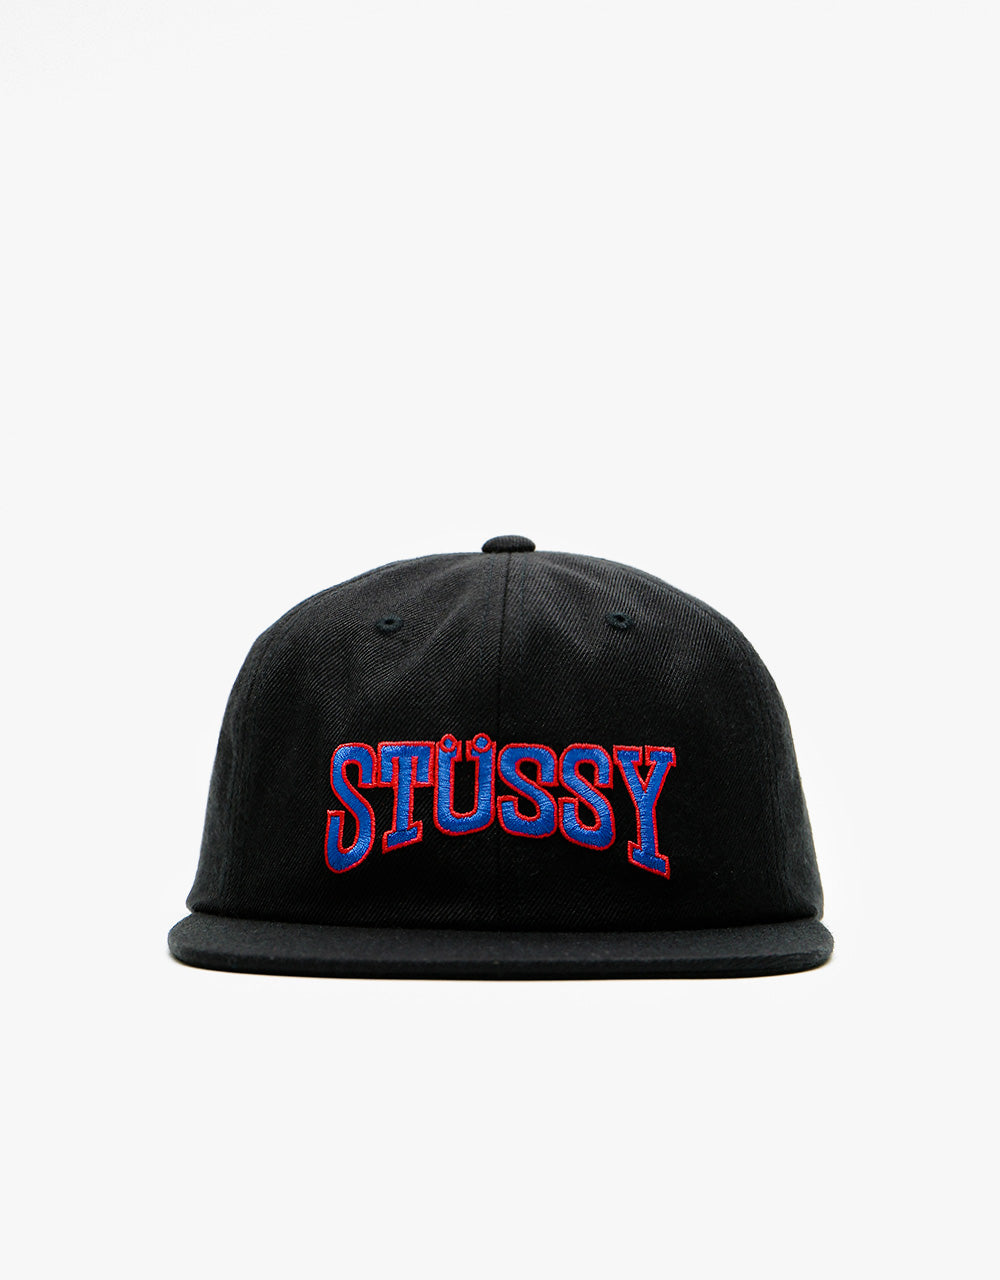 Stüssy Burly Arch Snapback Cap - Black